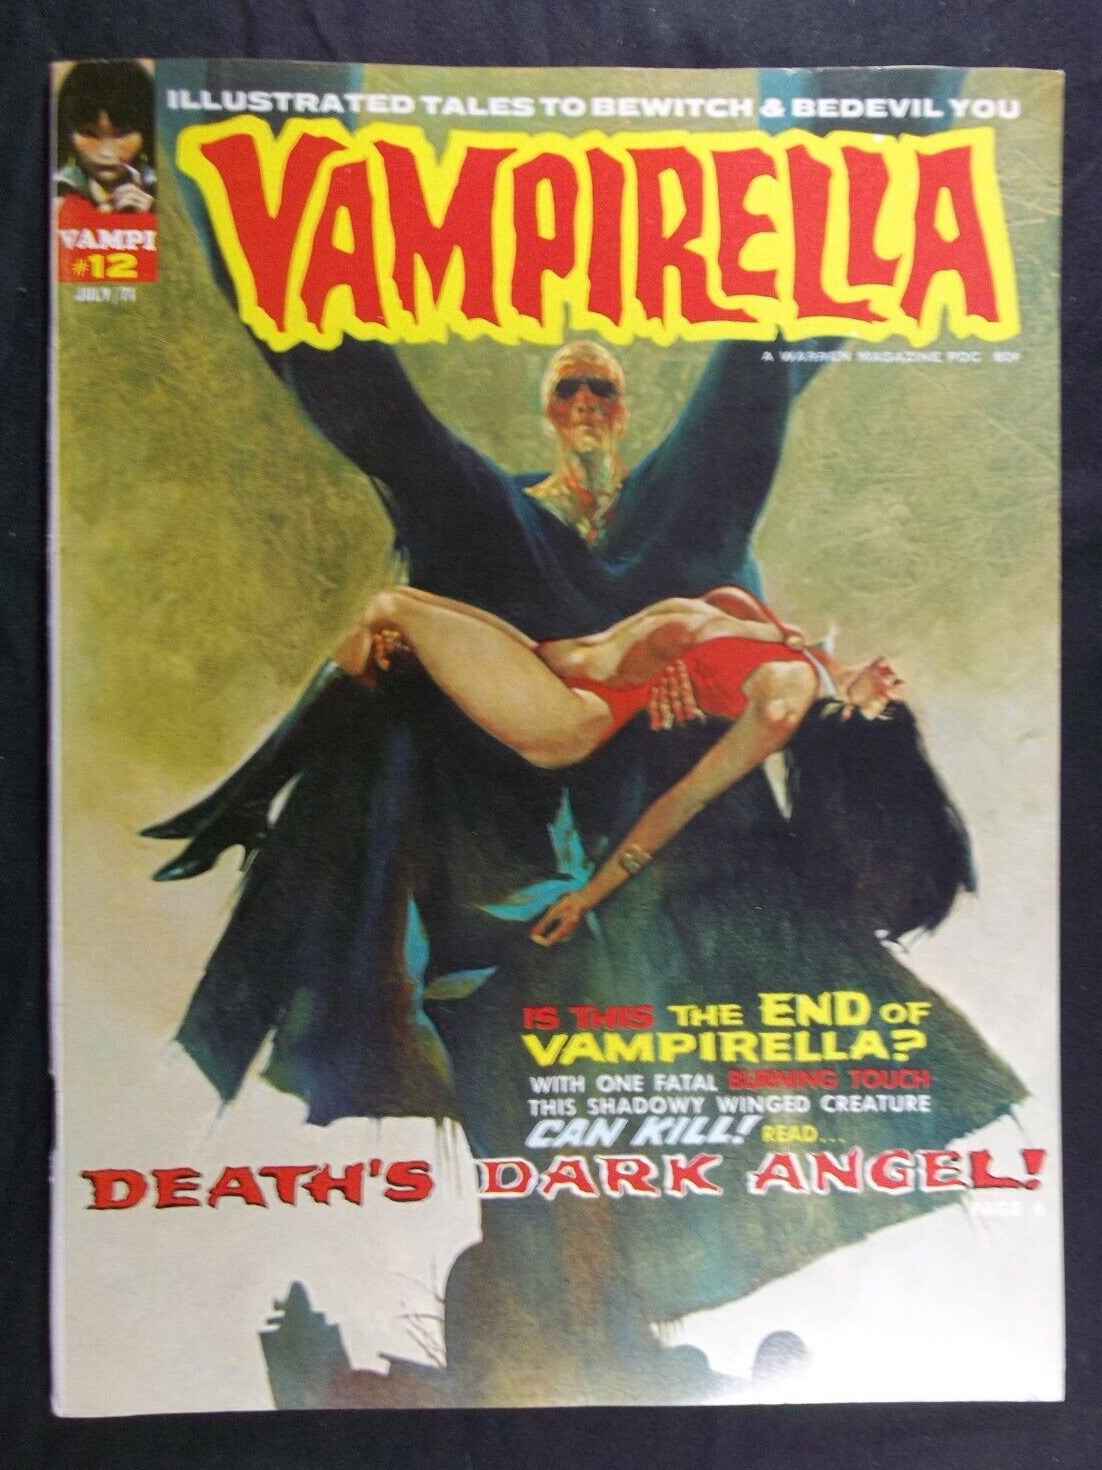 Vampirella #12 VF 7.5 Sanjulian Cover Art, Vintage Warren Magazine 1971